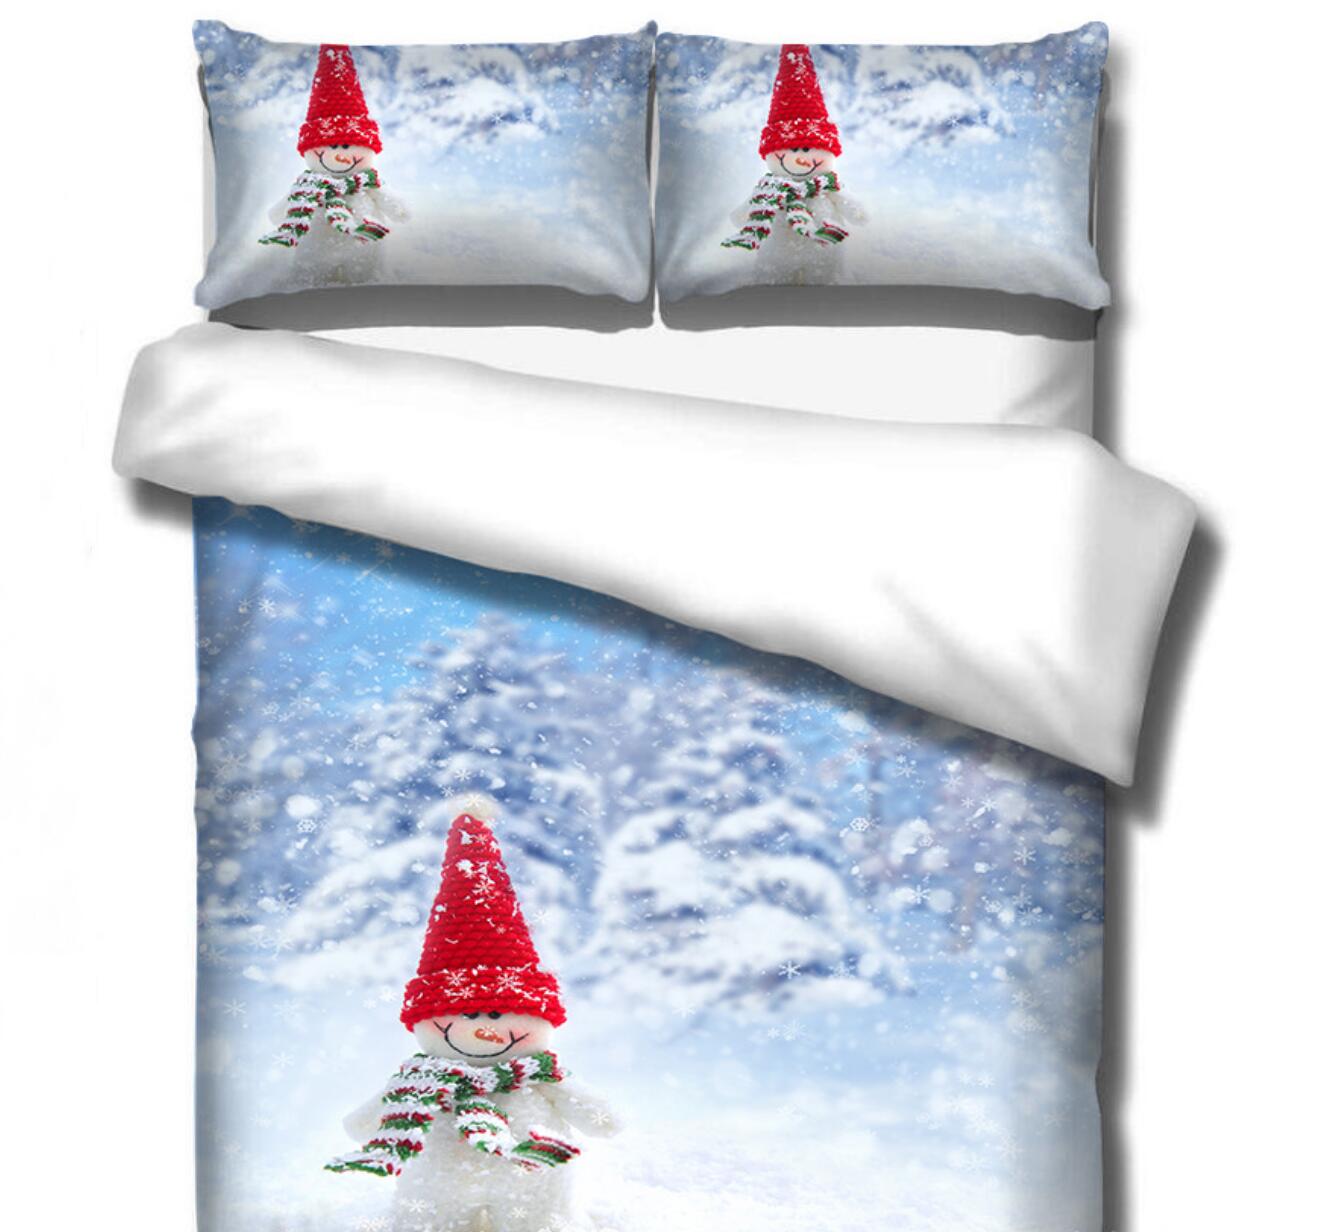 3D Snowman 32133 Christmas Quilt Duvet Cover Xmas Bed Pillowcases